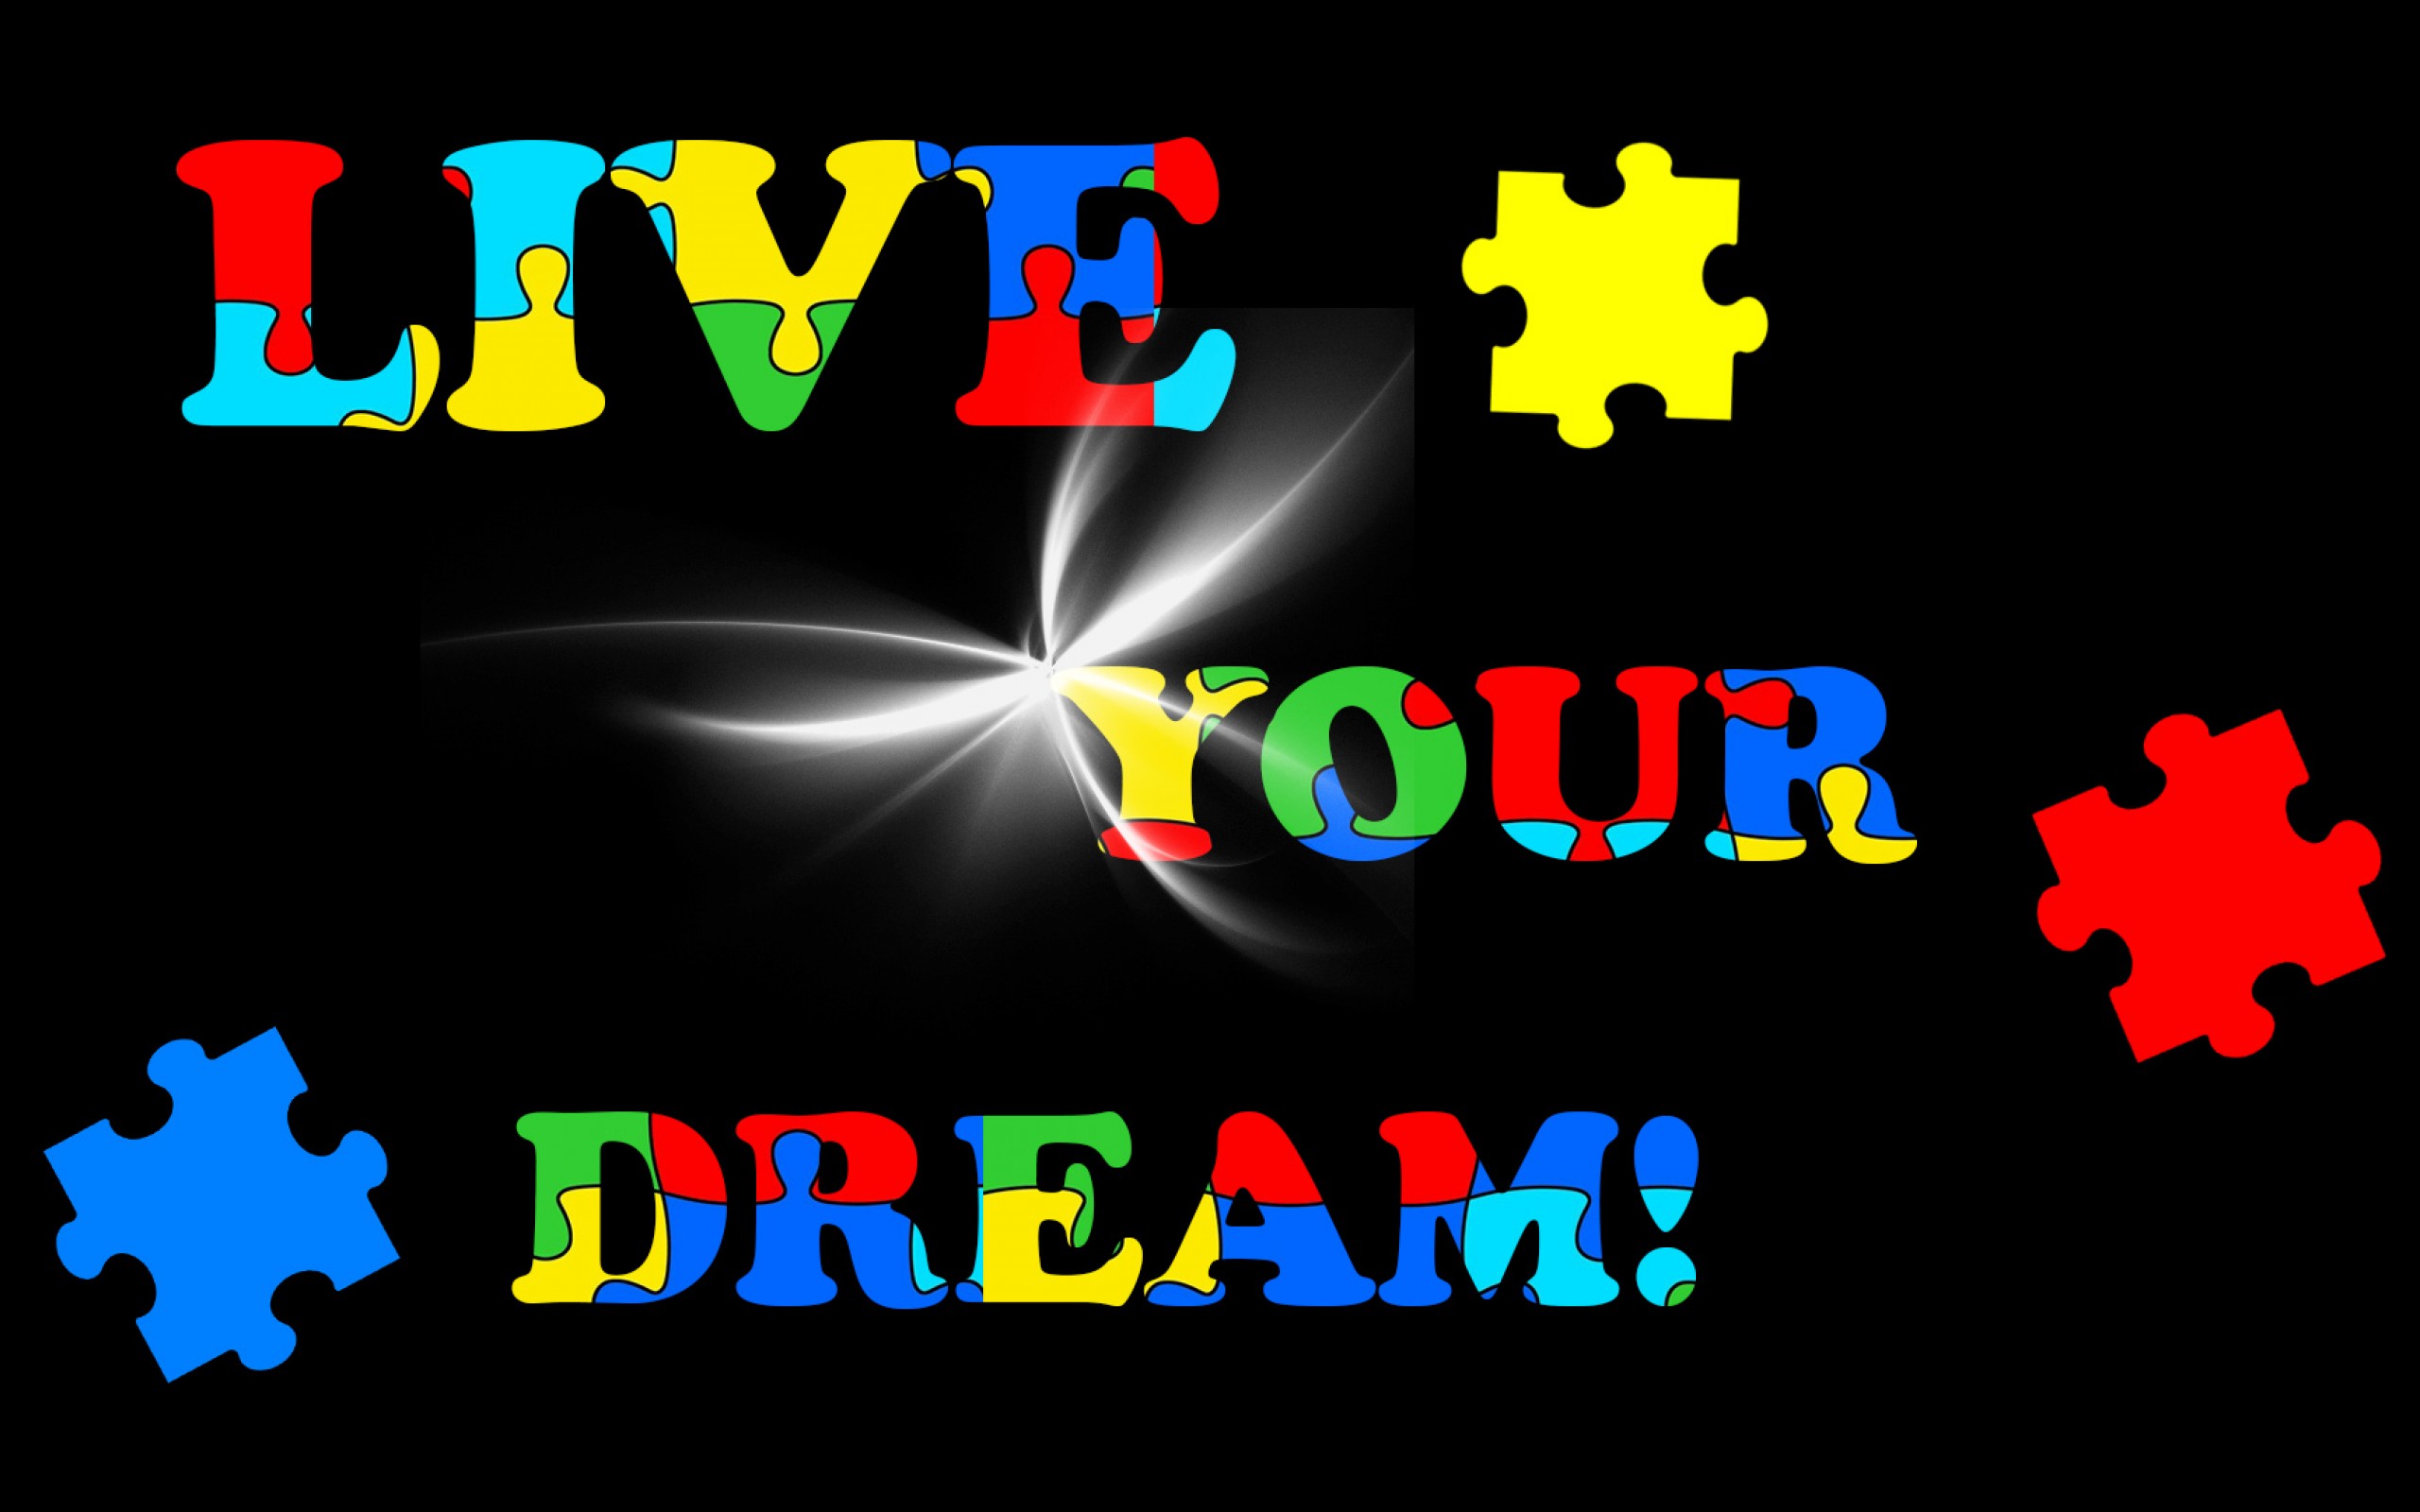 Live your dream! HD Wallpaper